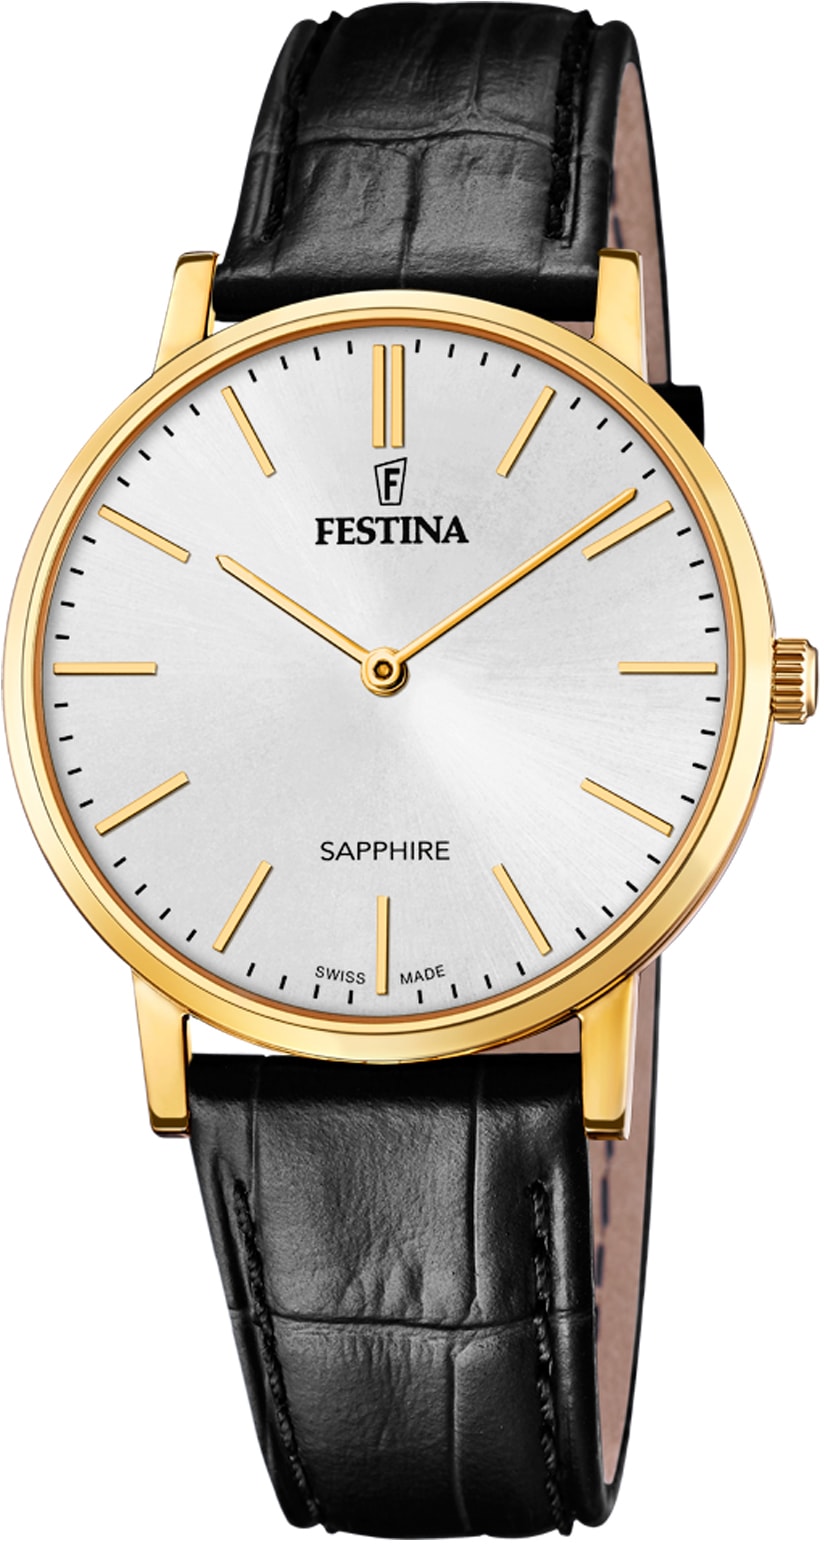 Festina Schweizer Uhr »Festina Swiss Made, F20016/1« online shoppen bei OTTO